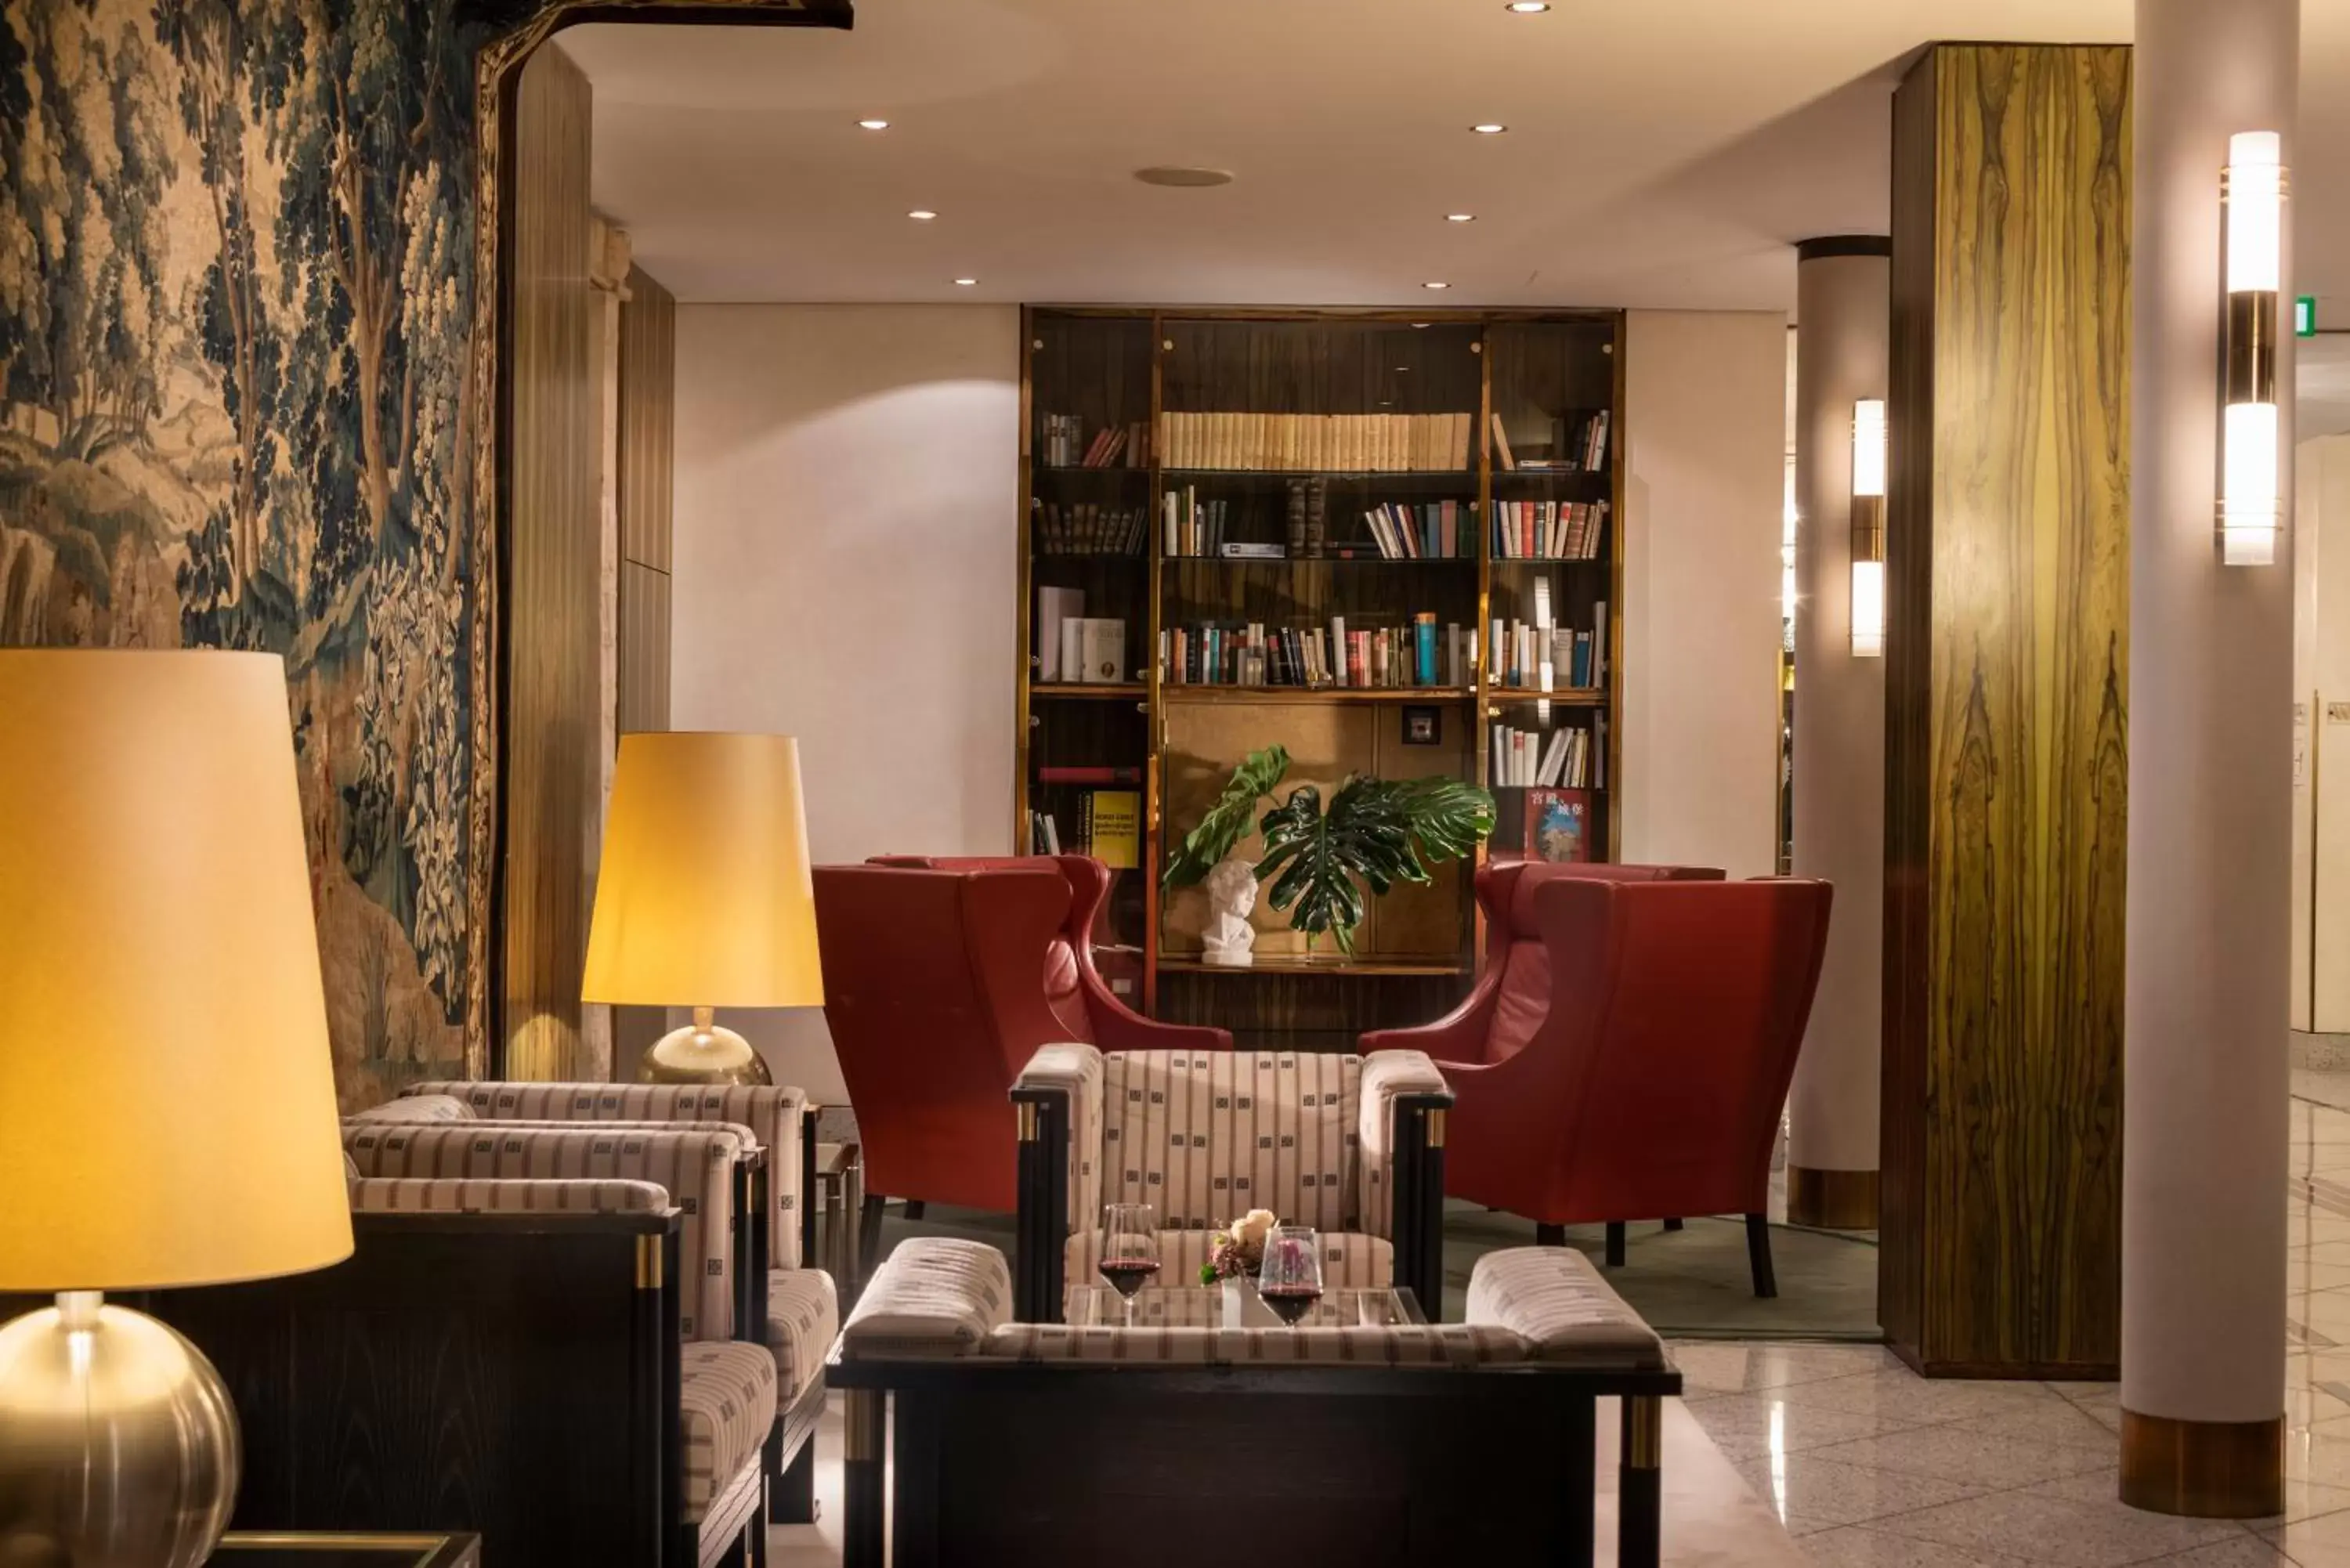 Lobby or reception in Best Western Premier Grand Hotel Russischer Hof